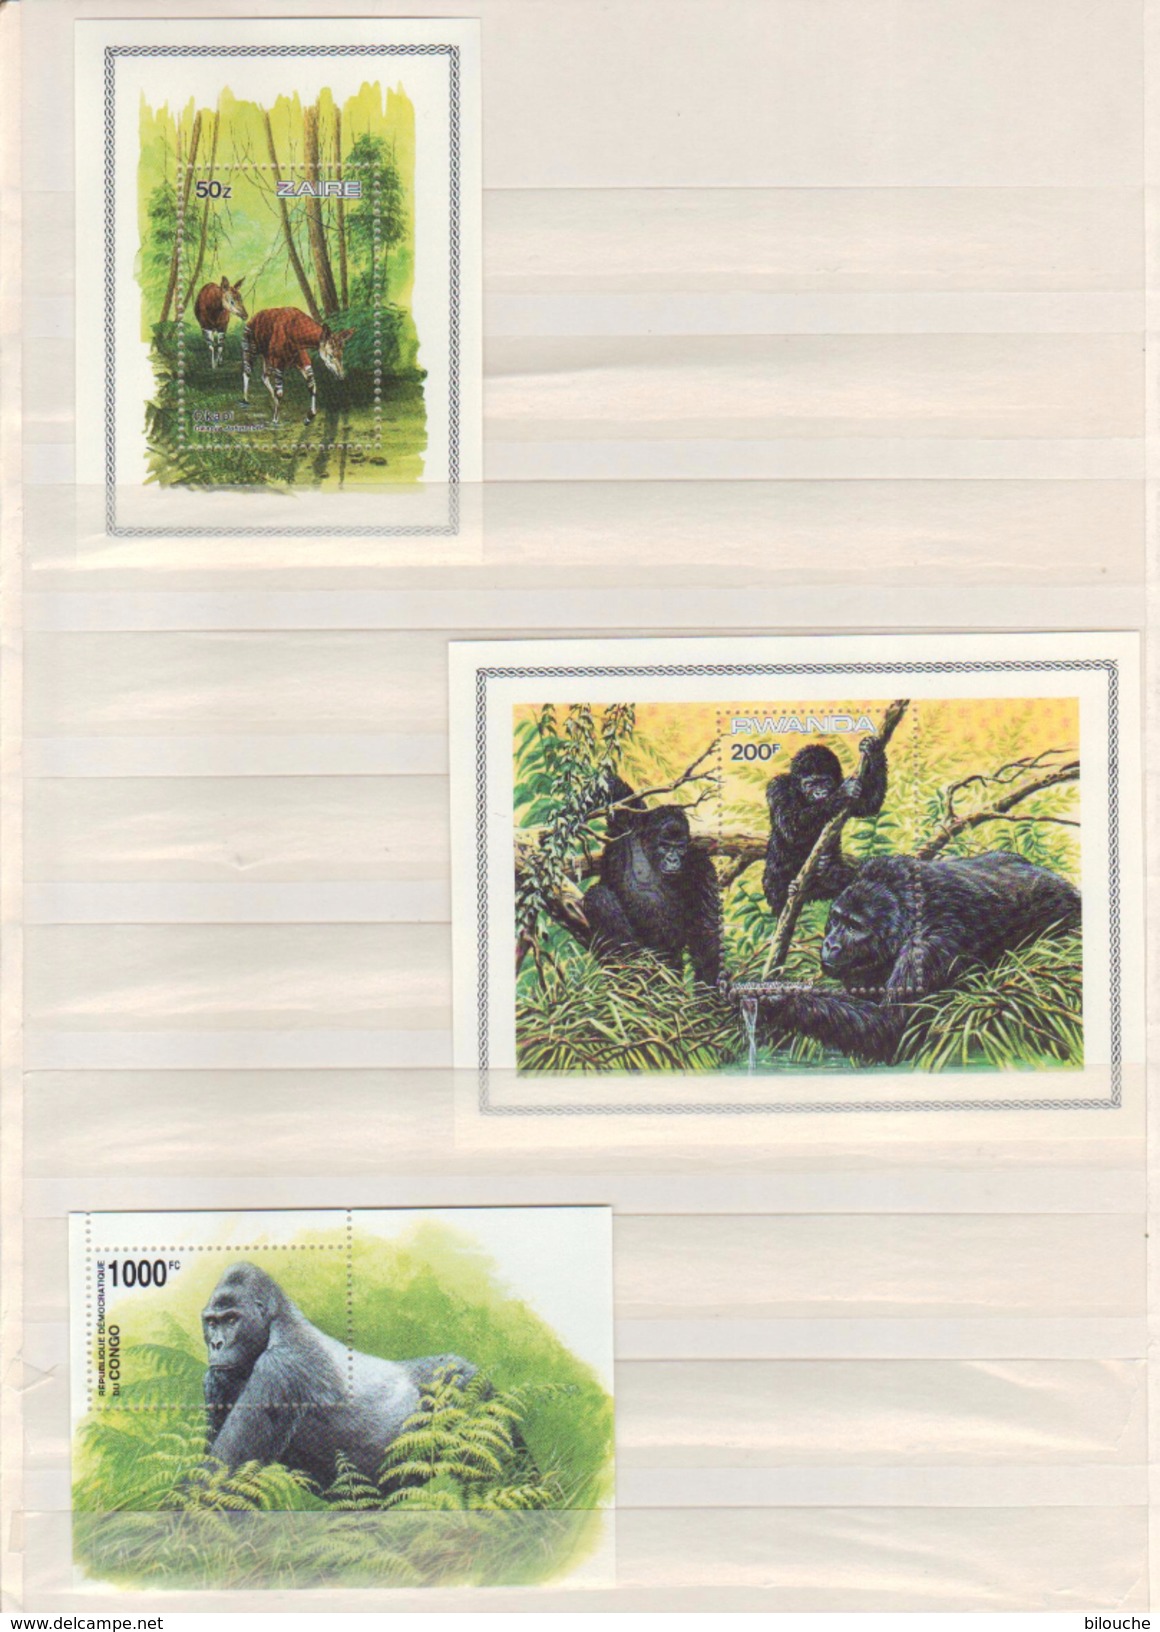 WWF / LES 3 BLOCS DENTELES EMIS / ZAIRE 1984 - RWANDA 1985 - RDC 2002 / BUZIN - Unused Stamps